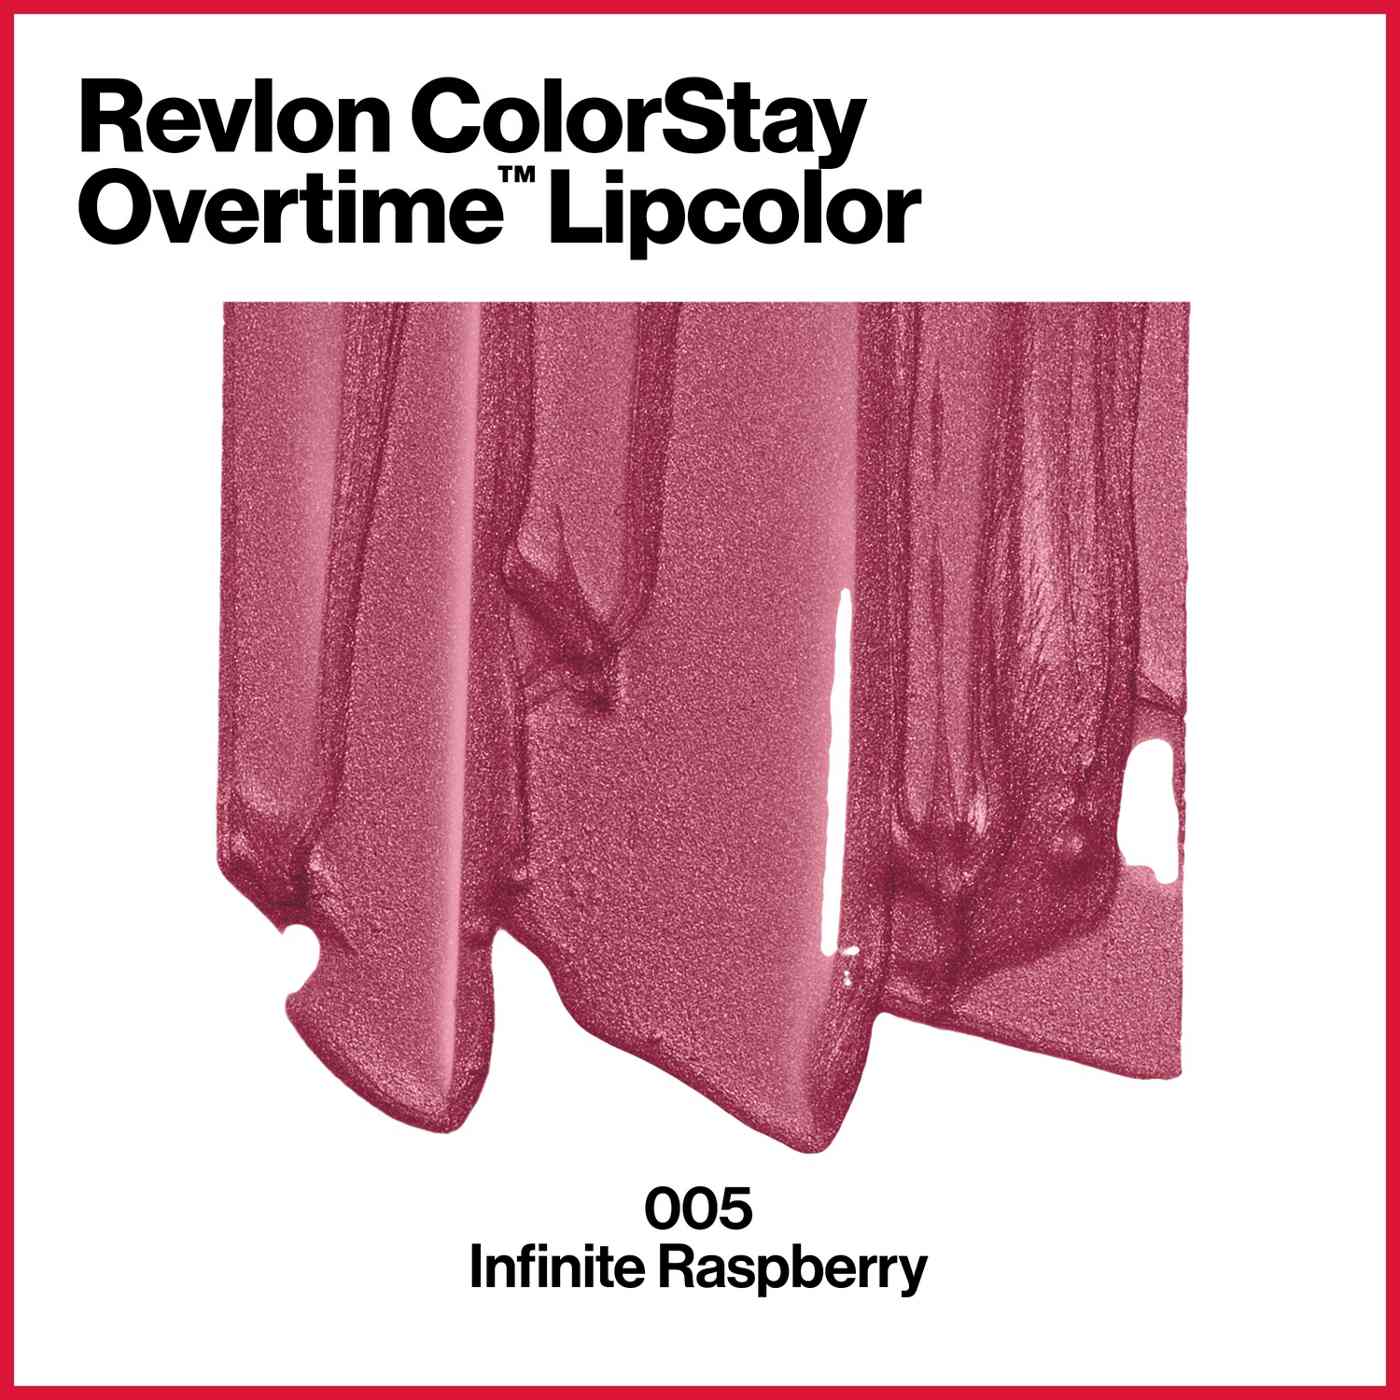 Revlon ColorStay Overtime Lipcolor, Long Wearing Liquid Lipstick, 005 Infinite Raspberry; image 2 of 7